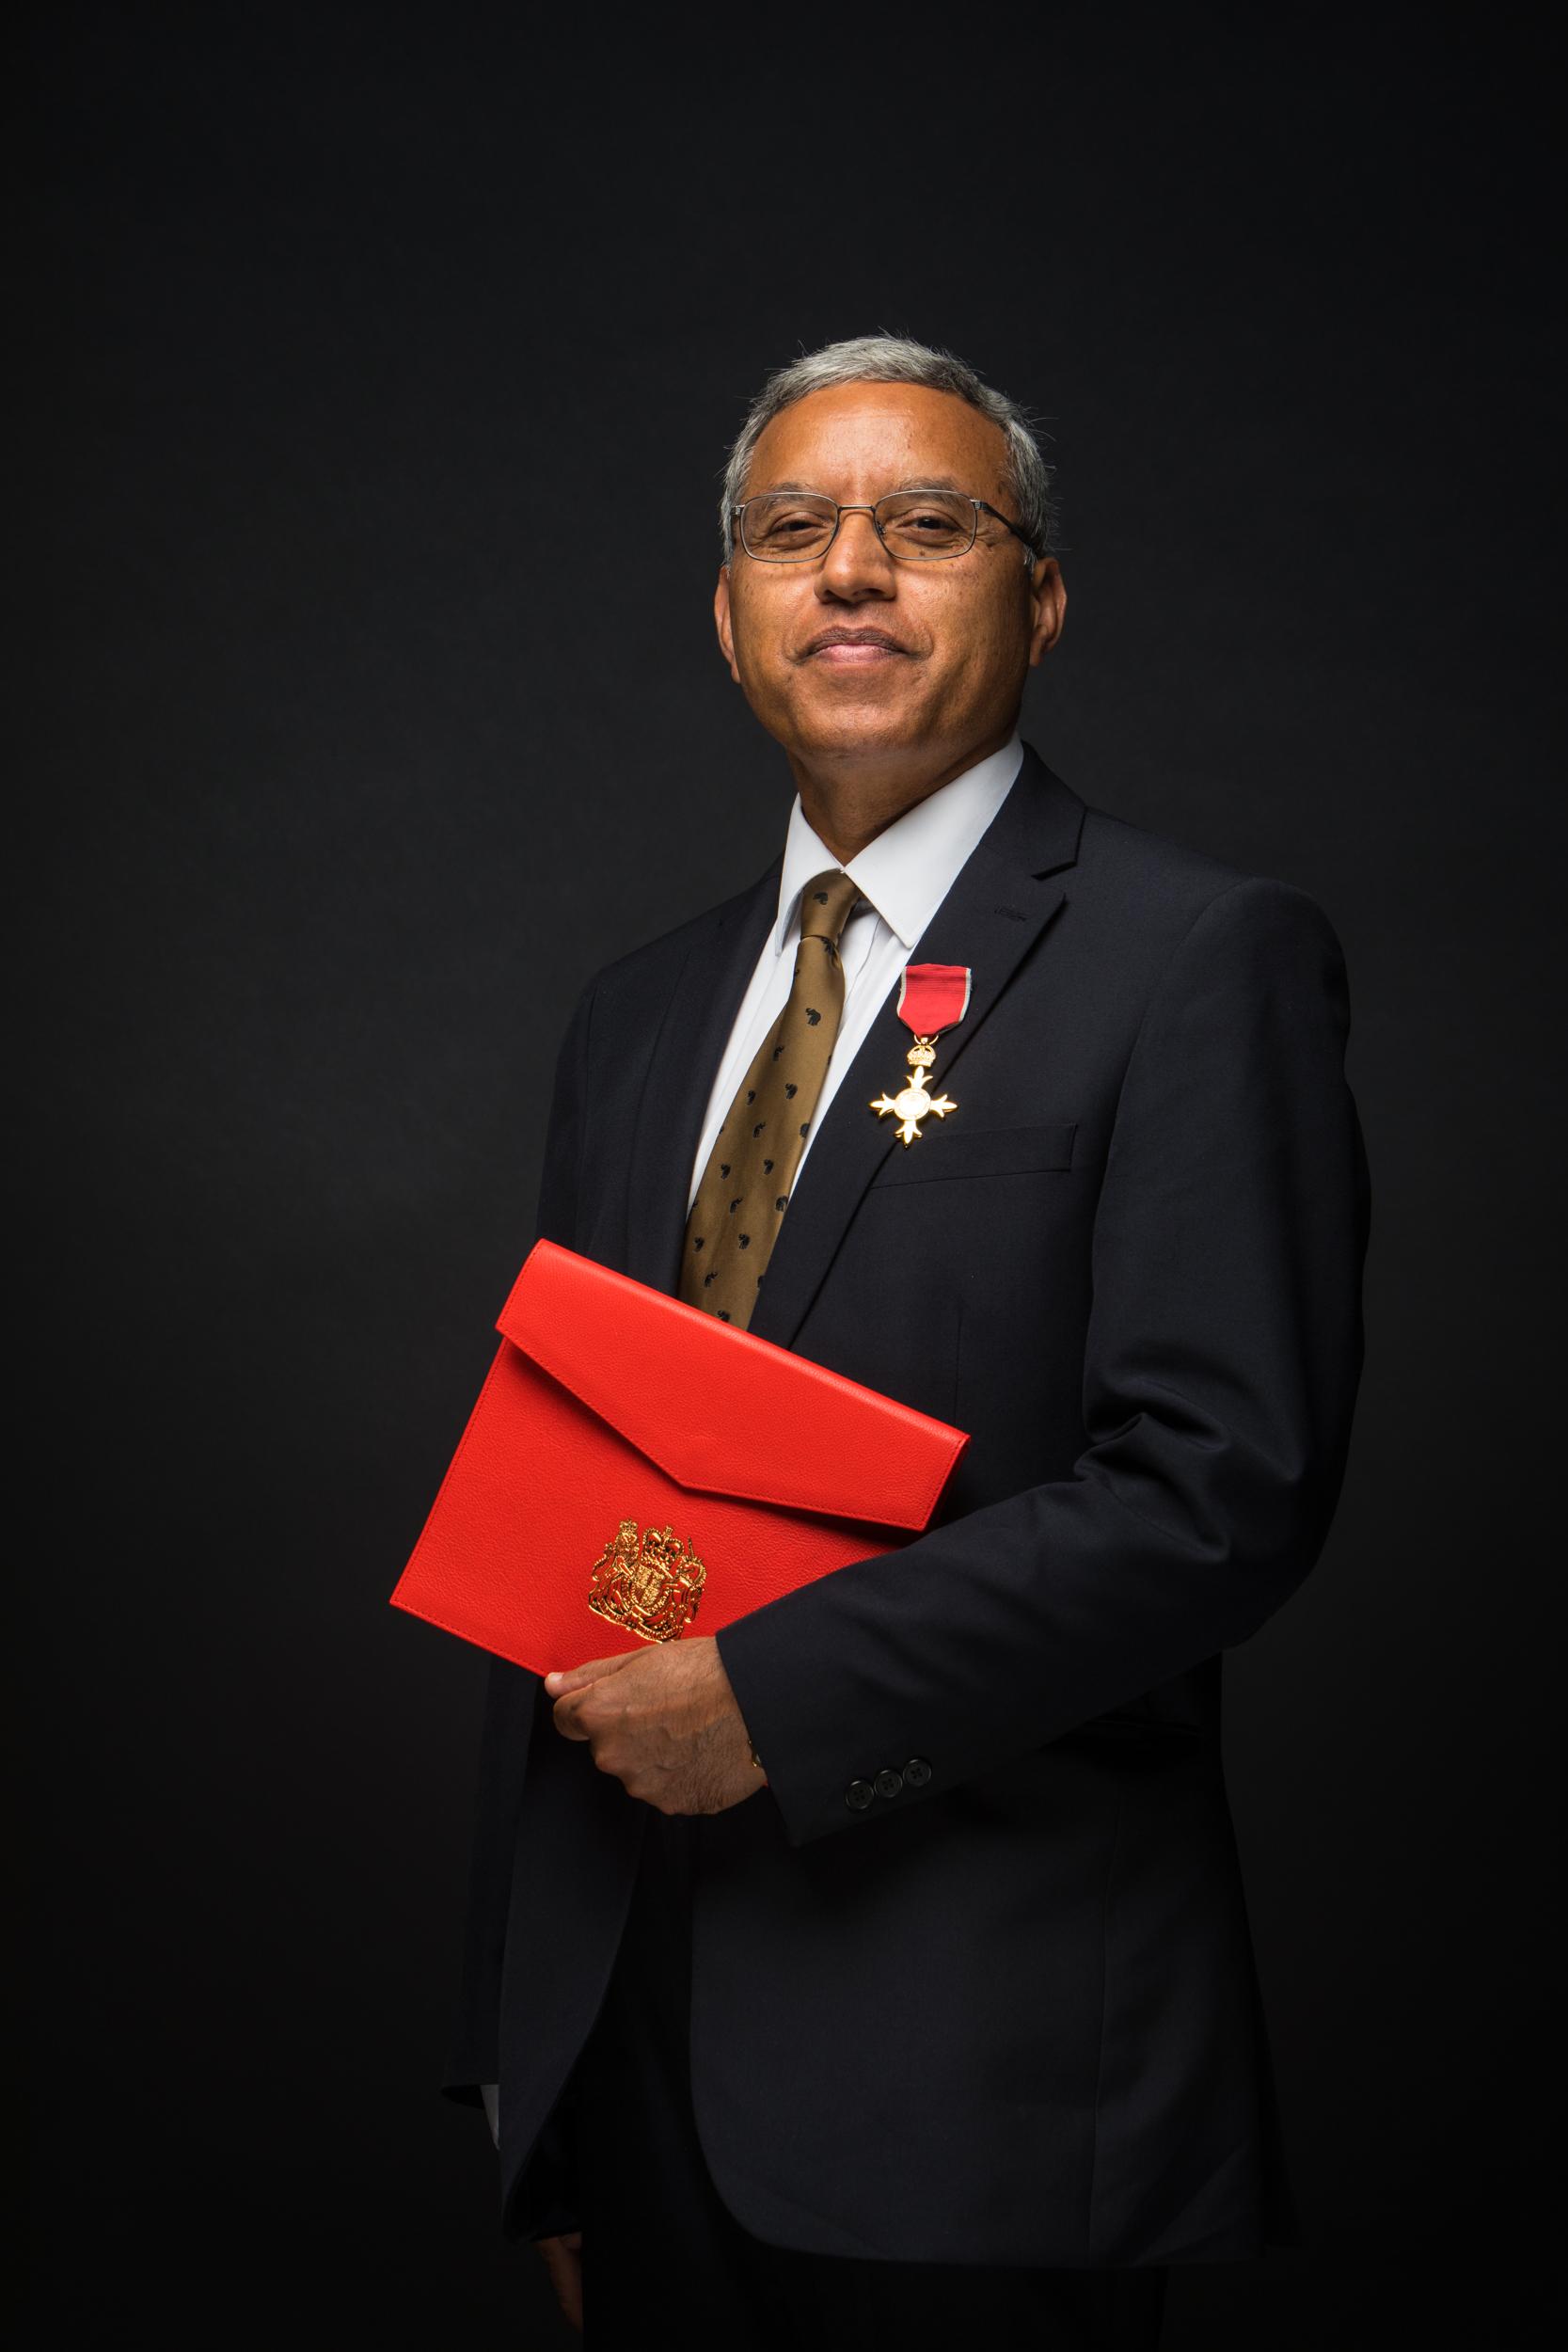 Professor Subedi holding a red book.